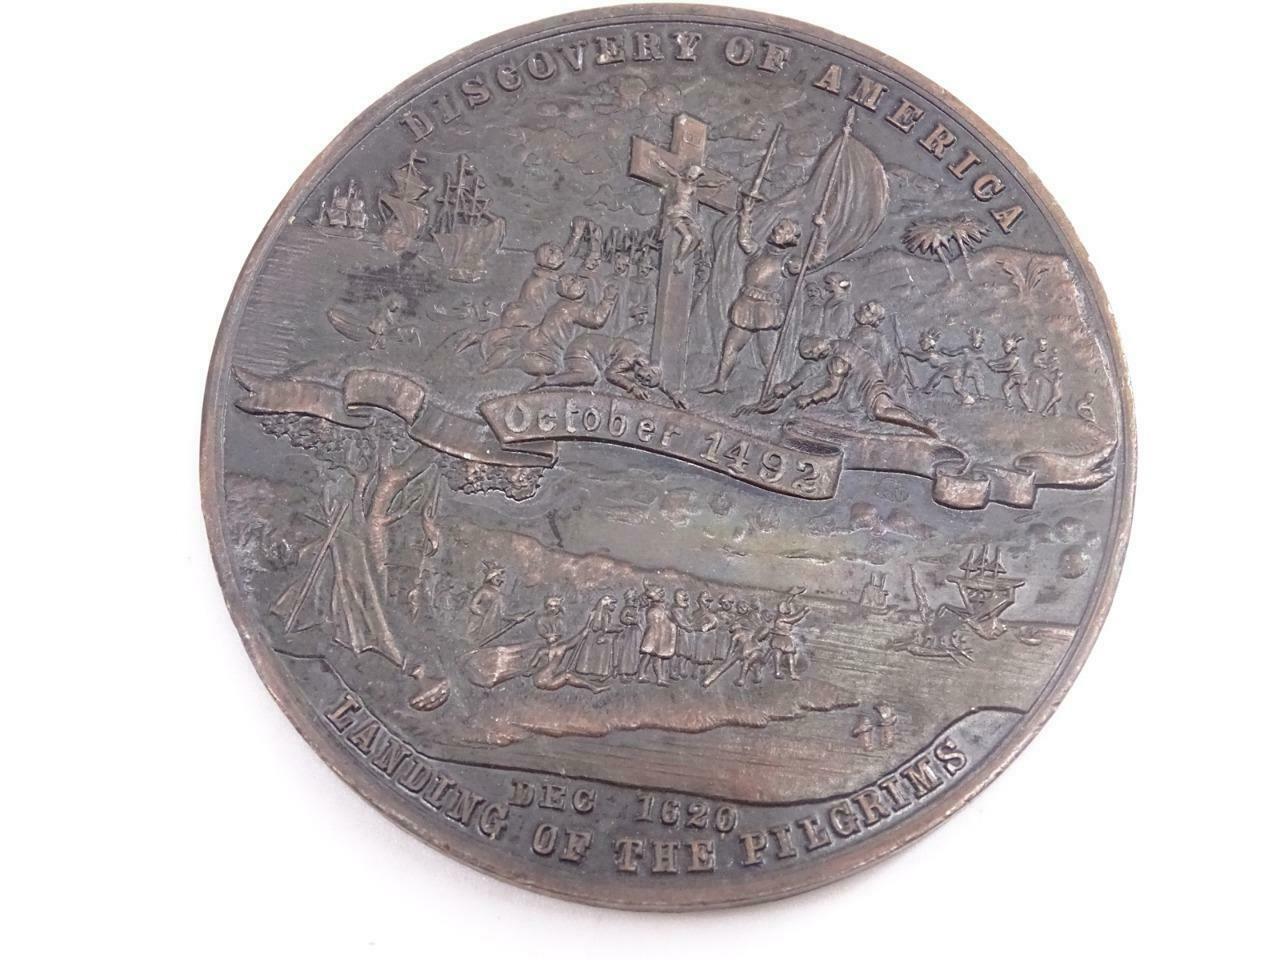 Antique 1892 Chicago World's Fair Columbian Exposition Souvenir Medal Pilgrims